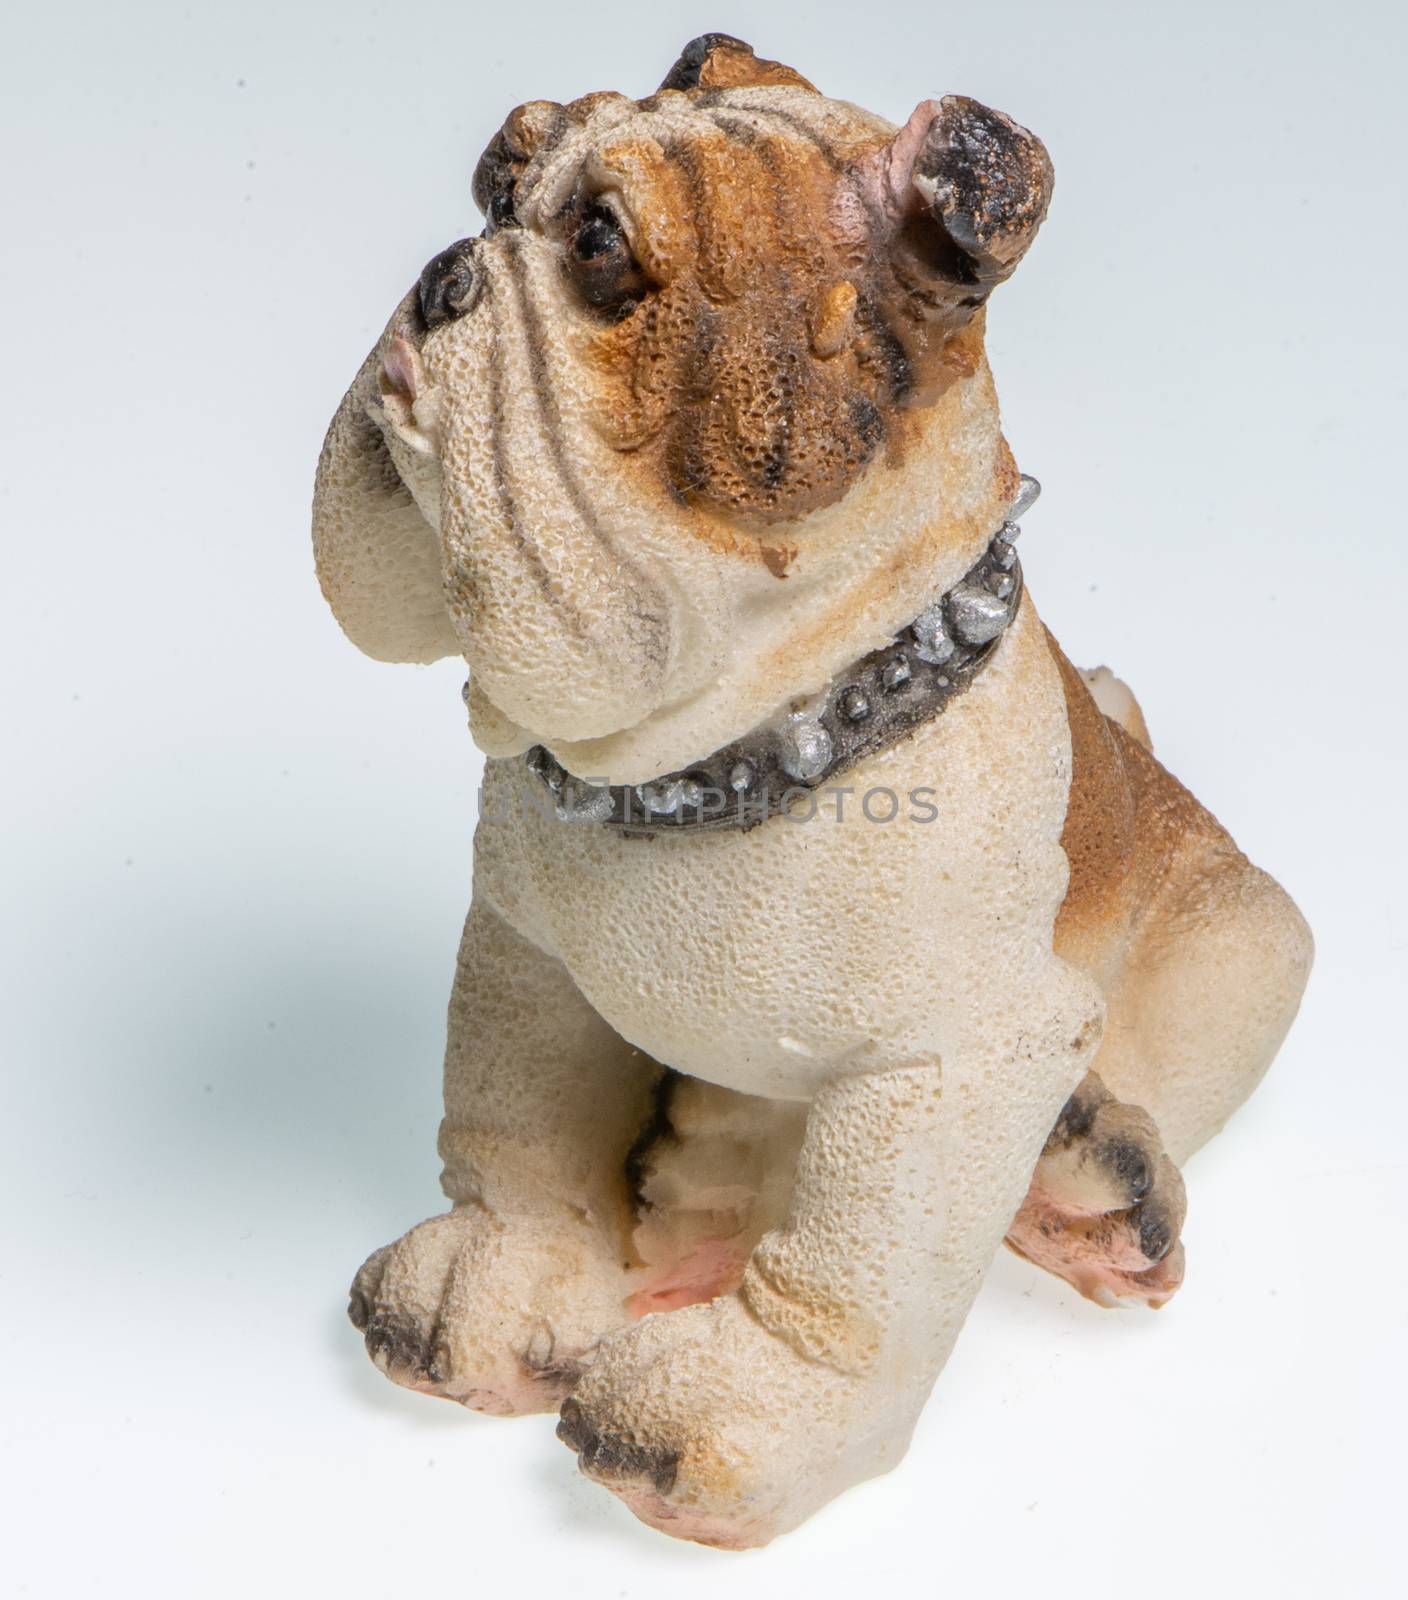 Miniature depicting an English Bulldog by brambillasimone